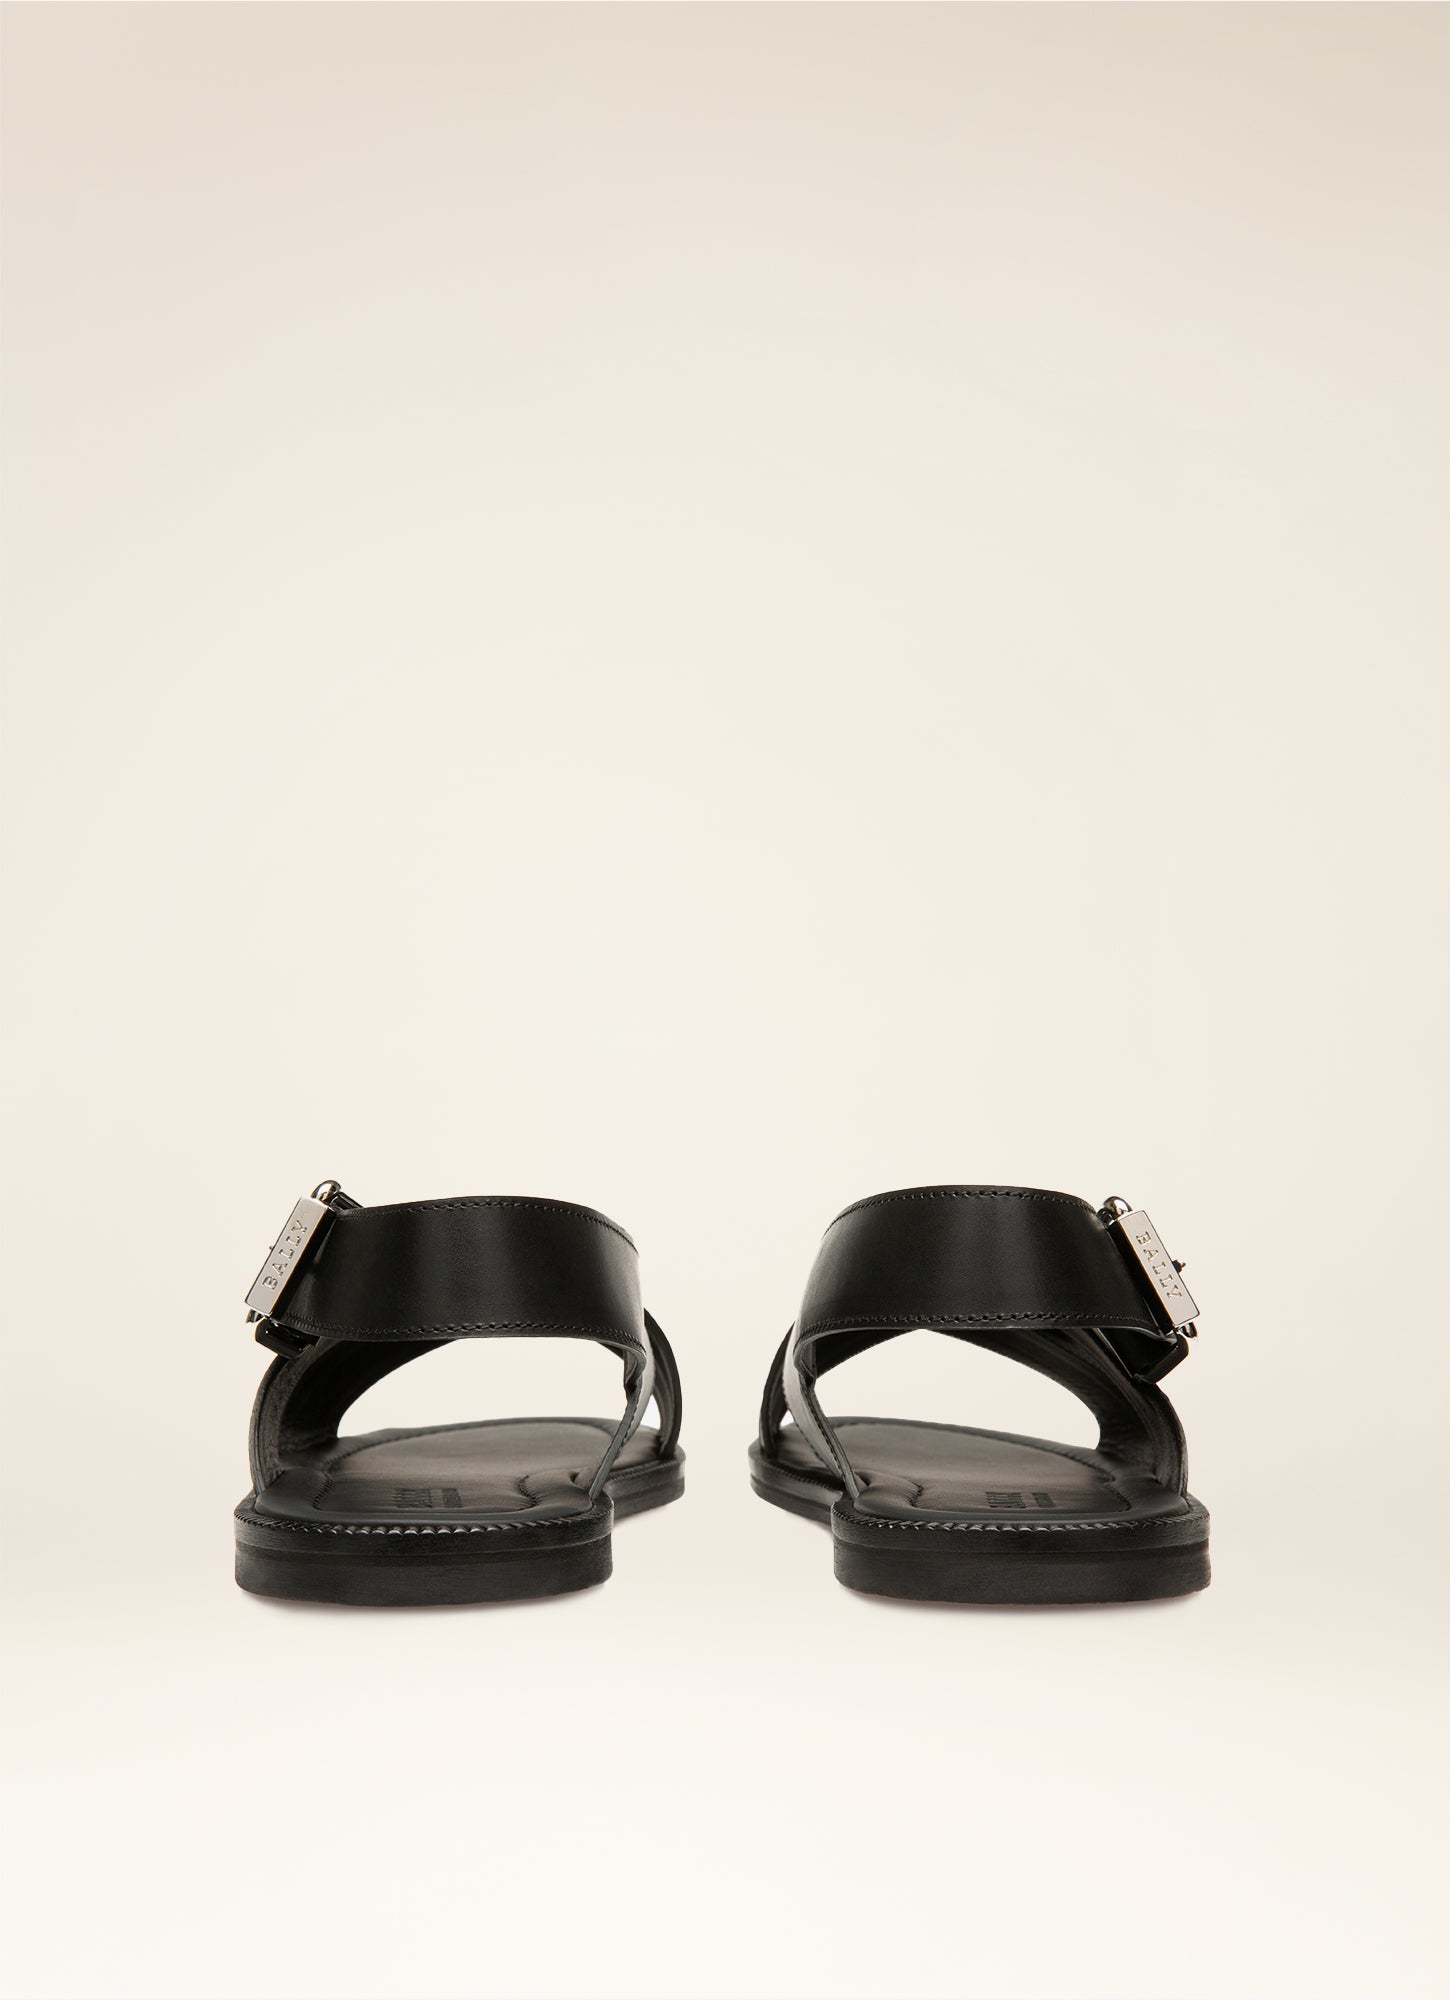 Shop Leather Sandals for Men Online in Dubai, UAE | Bally